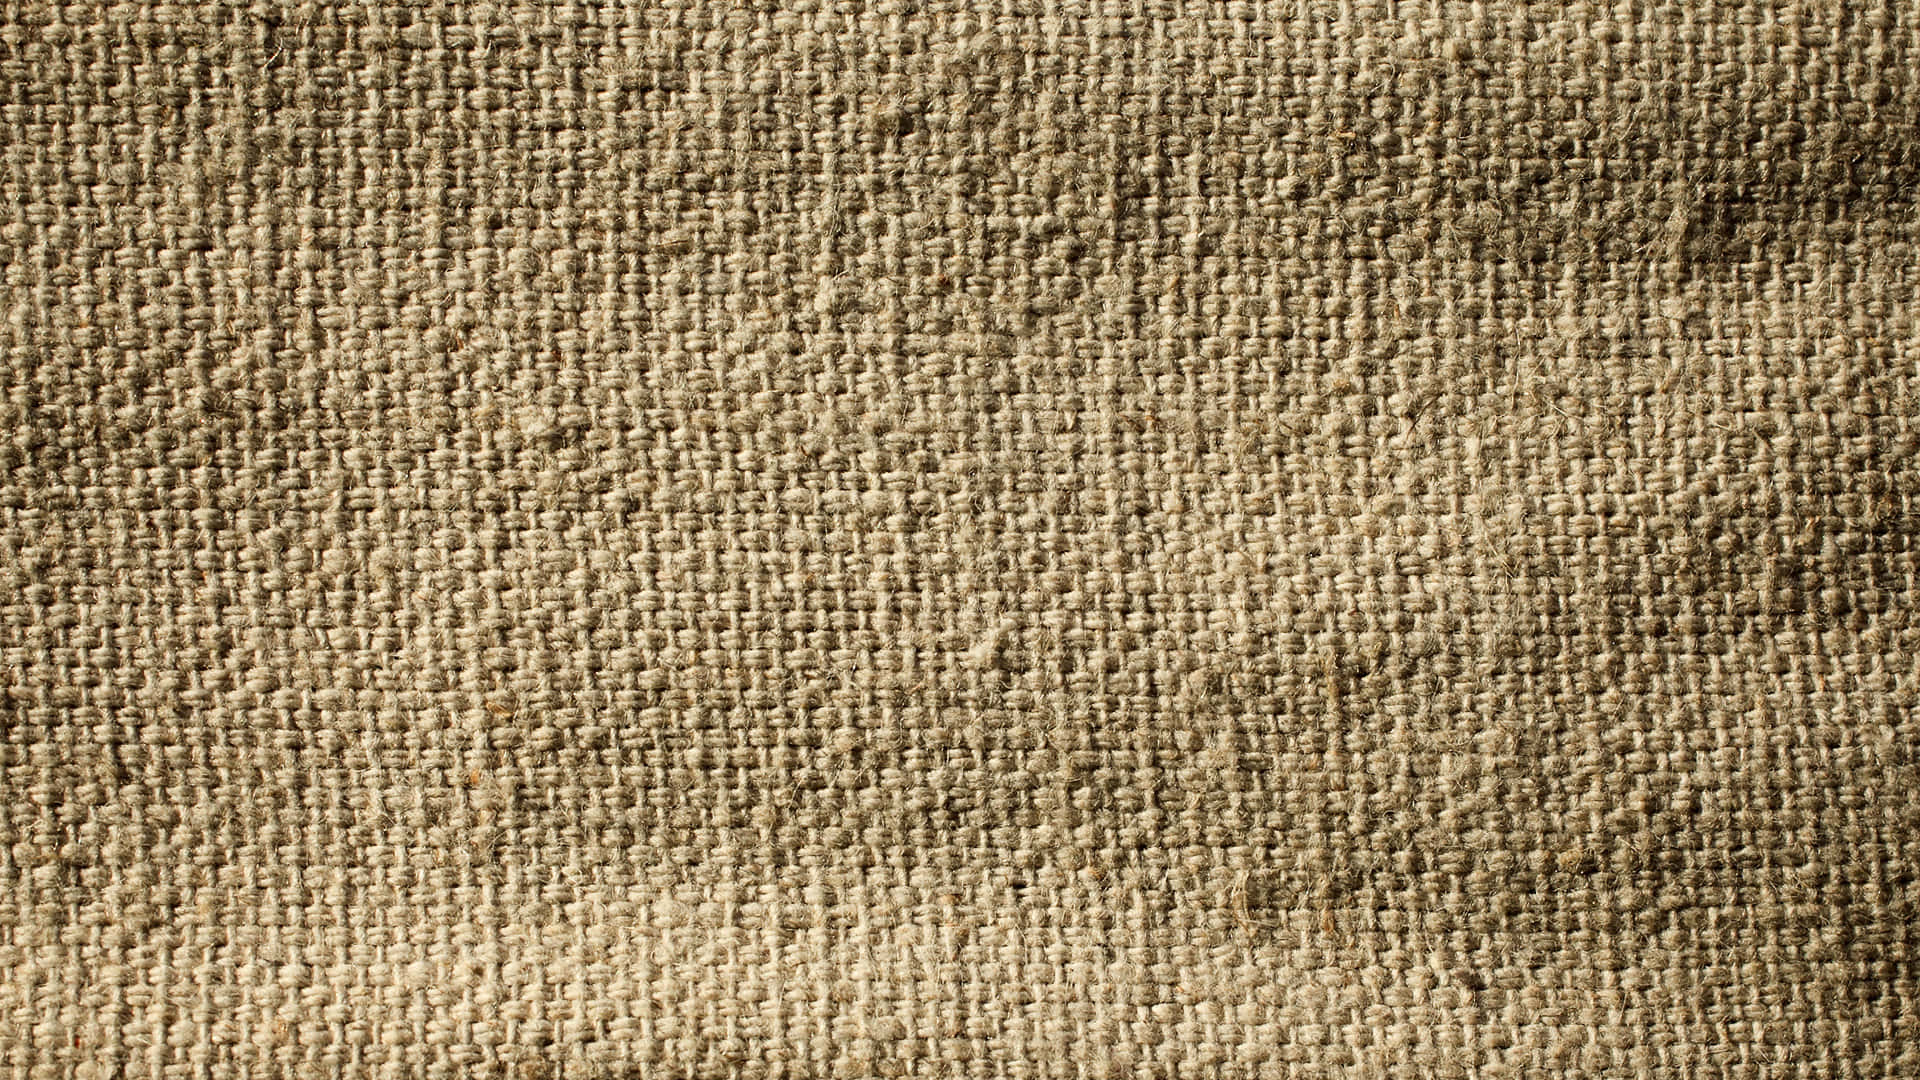 A Rustic Burlap Texture Background